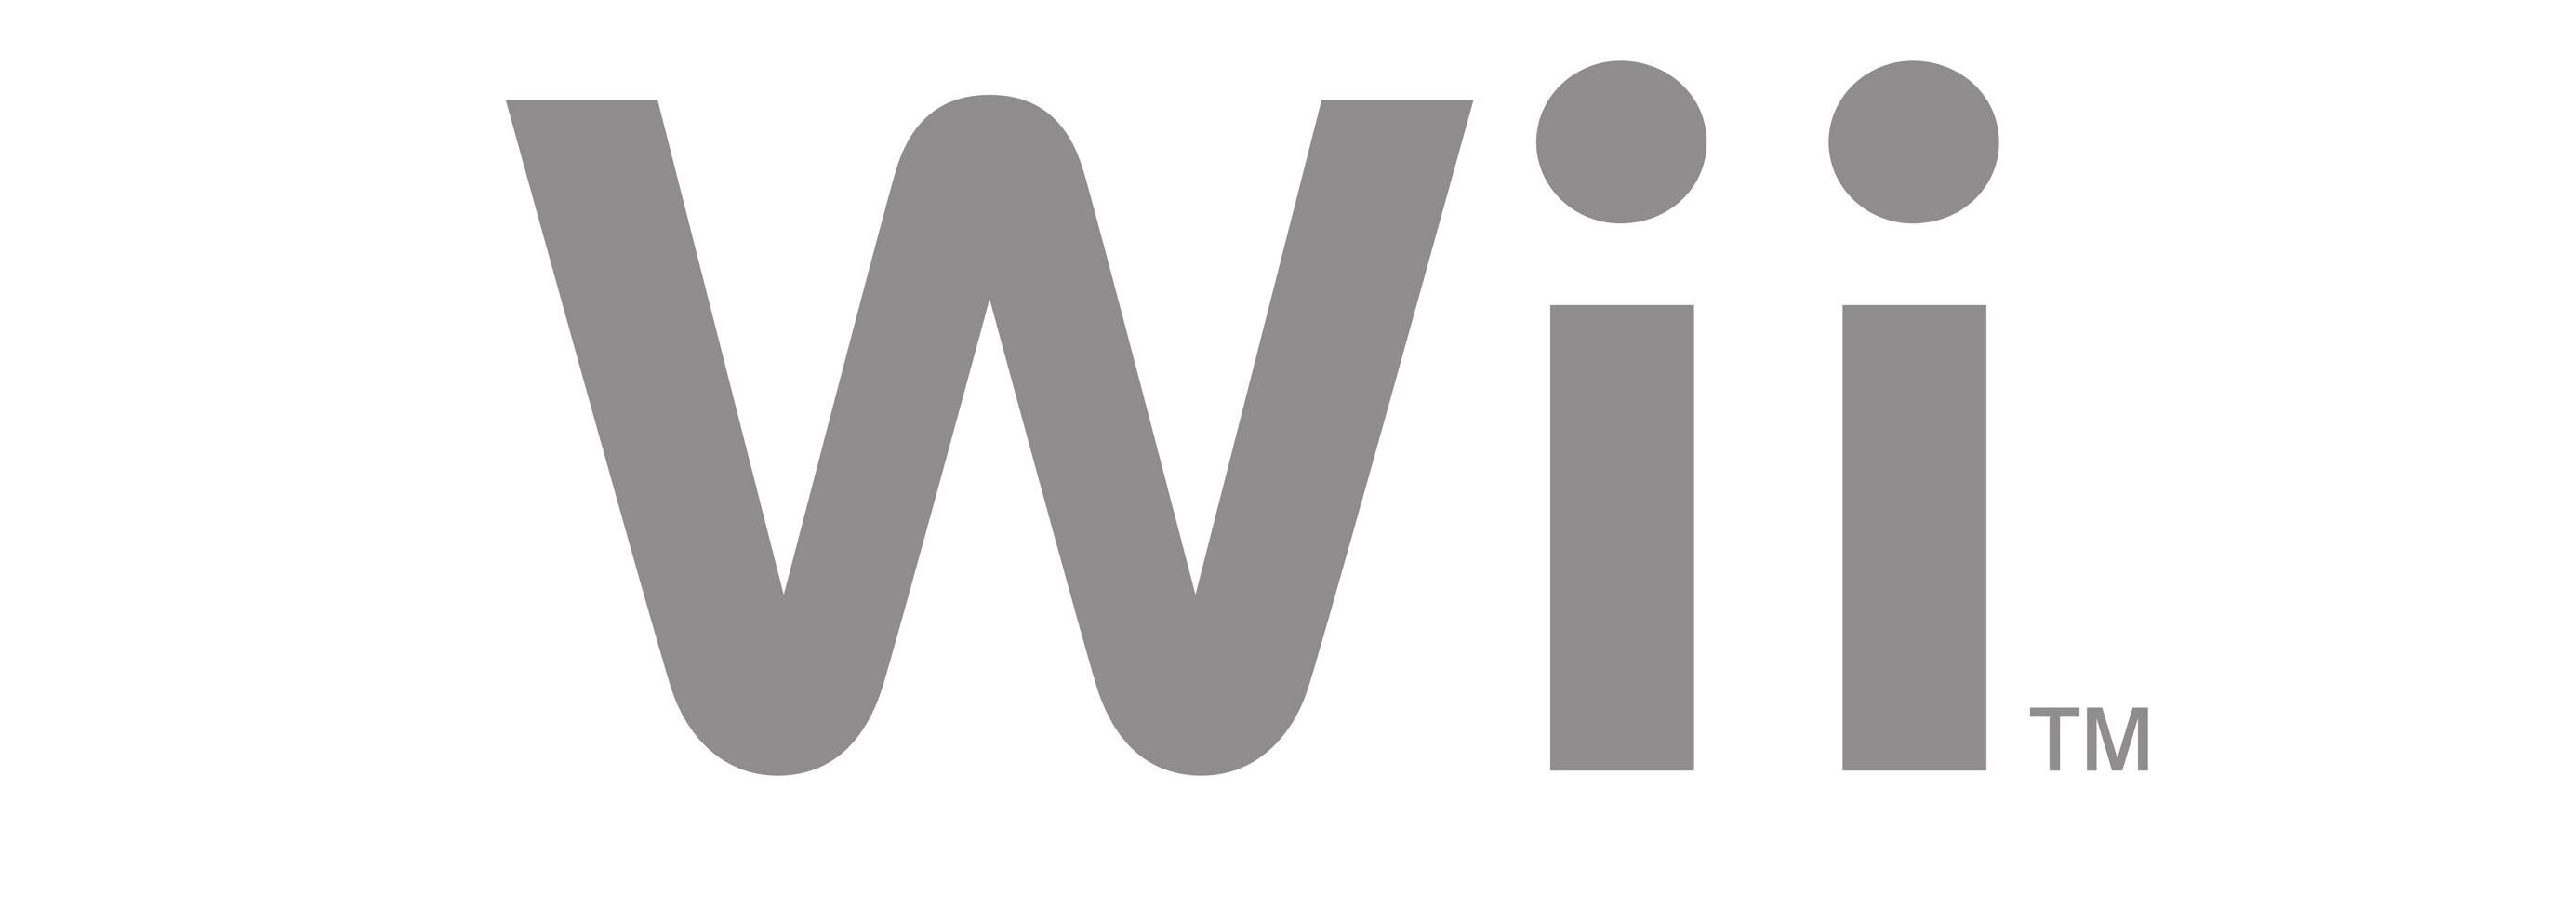 Console Nintendo Wii Black (Sem Caixa) #38 (Seminovo) - Arena Games - Loja  Geek